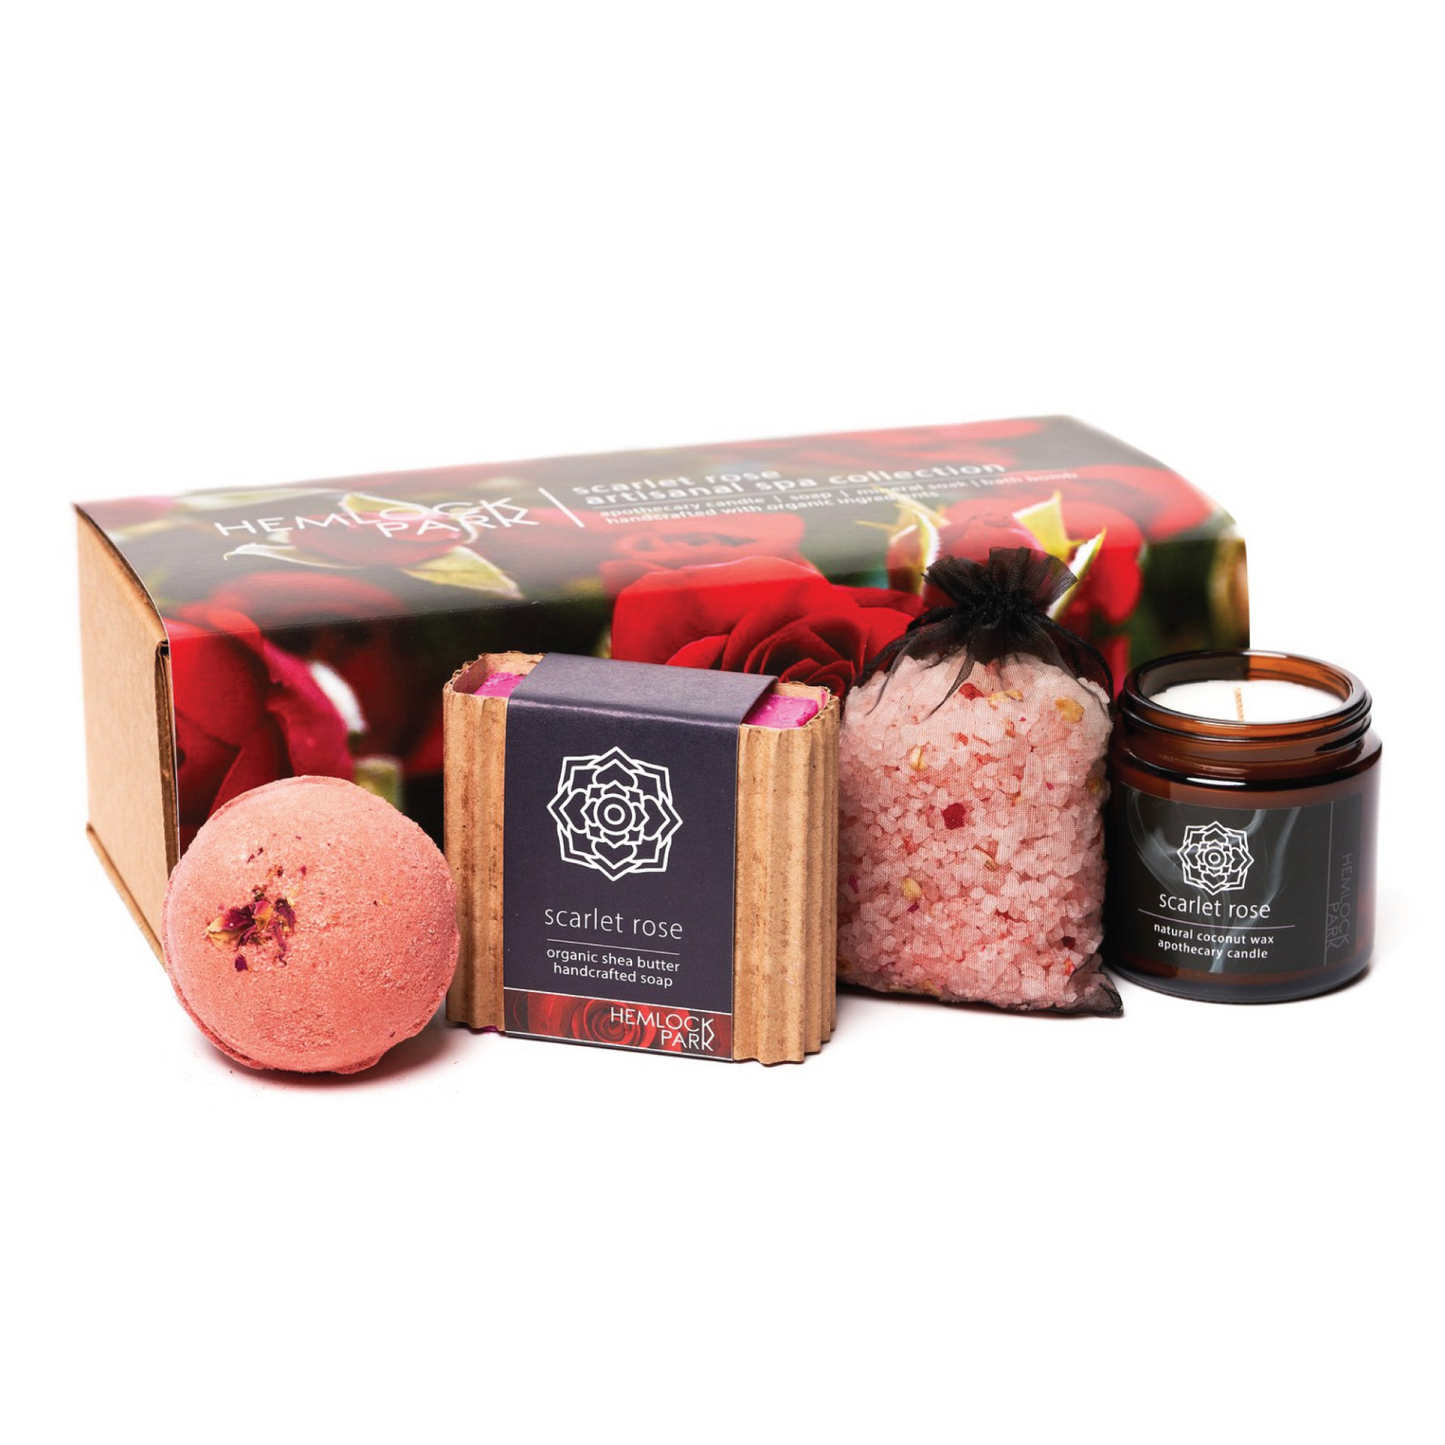 Scarlet Rose | Artisanal Spa Collection Gift Set - USA Medical Supply